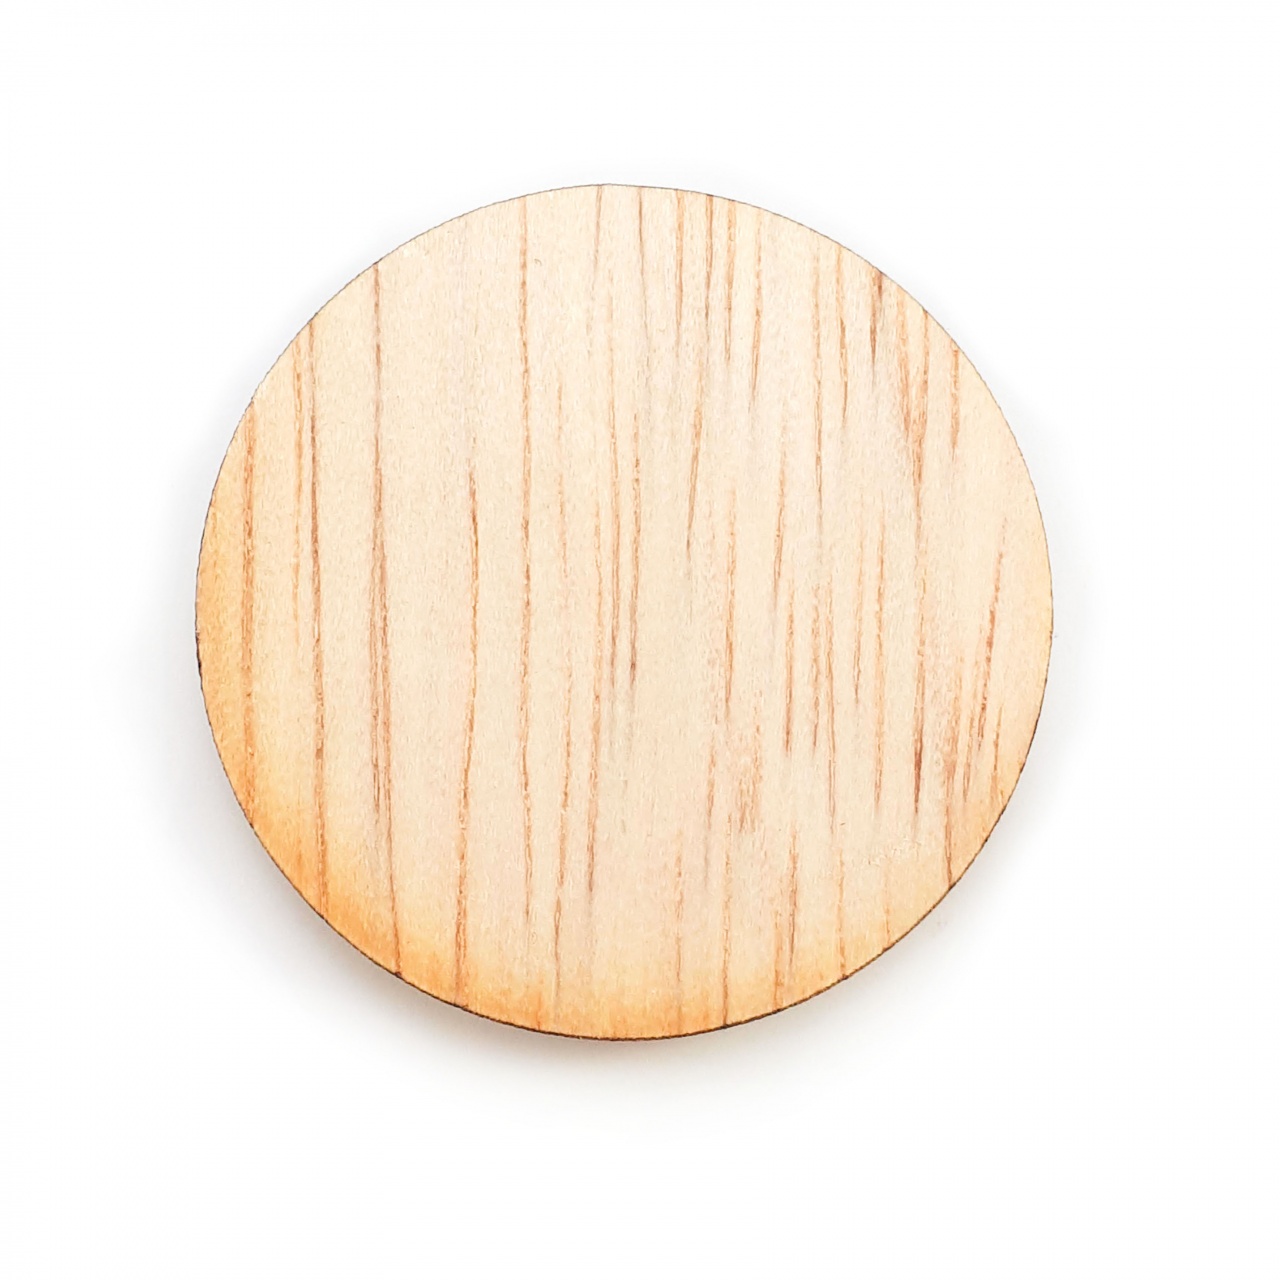 Bază rotundă 8 cm, placaj lemn :: Ø8 cm